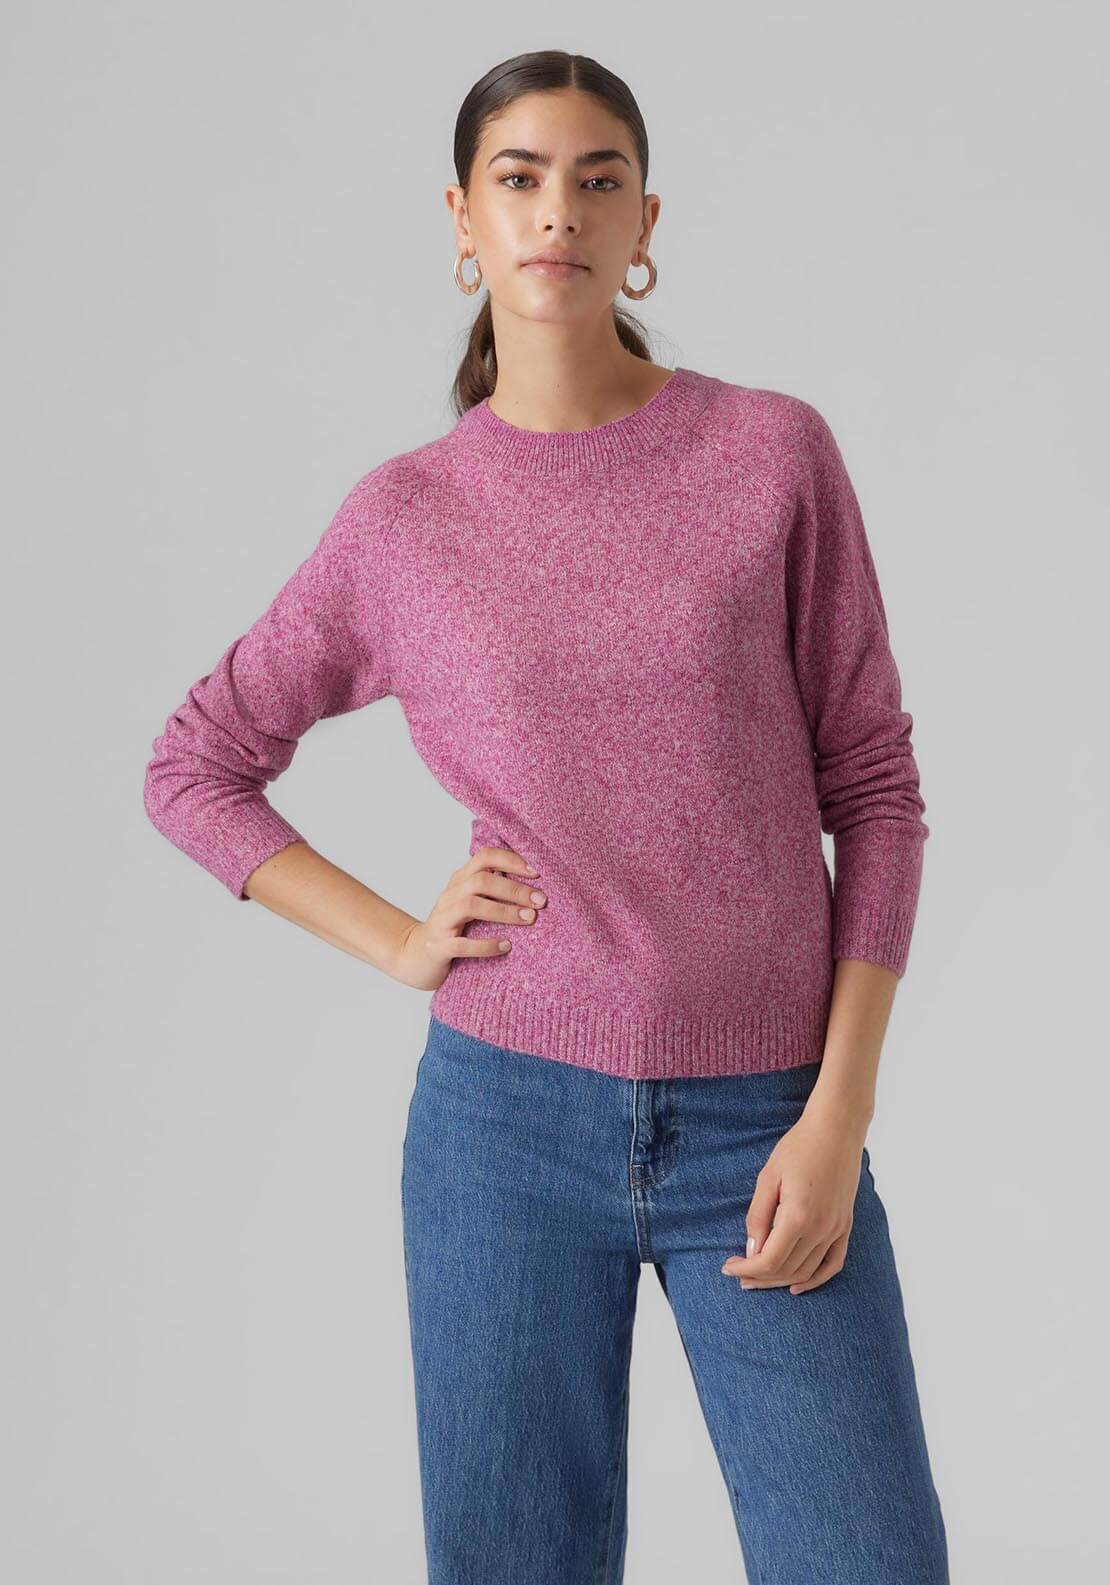 Vero Moda Pullover Jumper - Pink 1 Shaws Department Stores